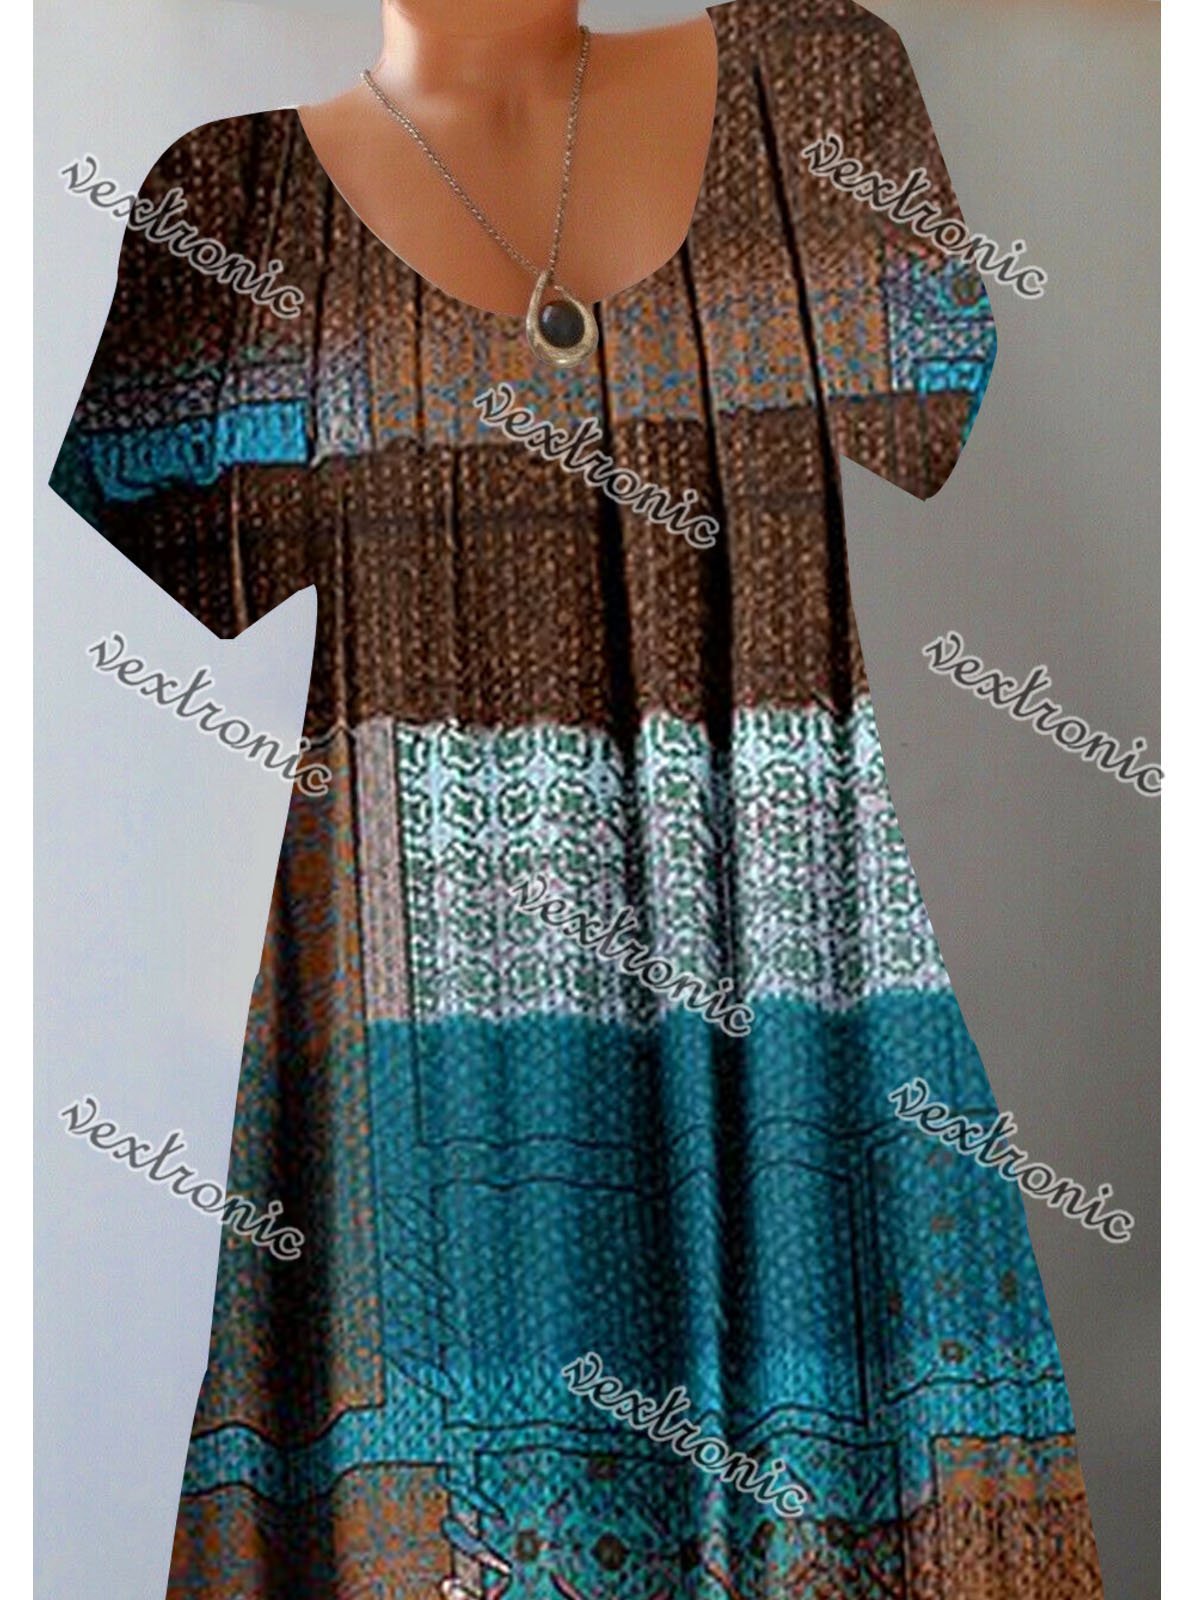 Women's Short Sleeve Scoop Neck Chic Printed Patchwork Midi Dress